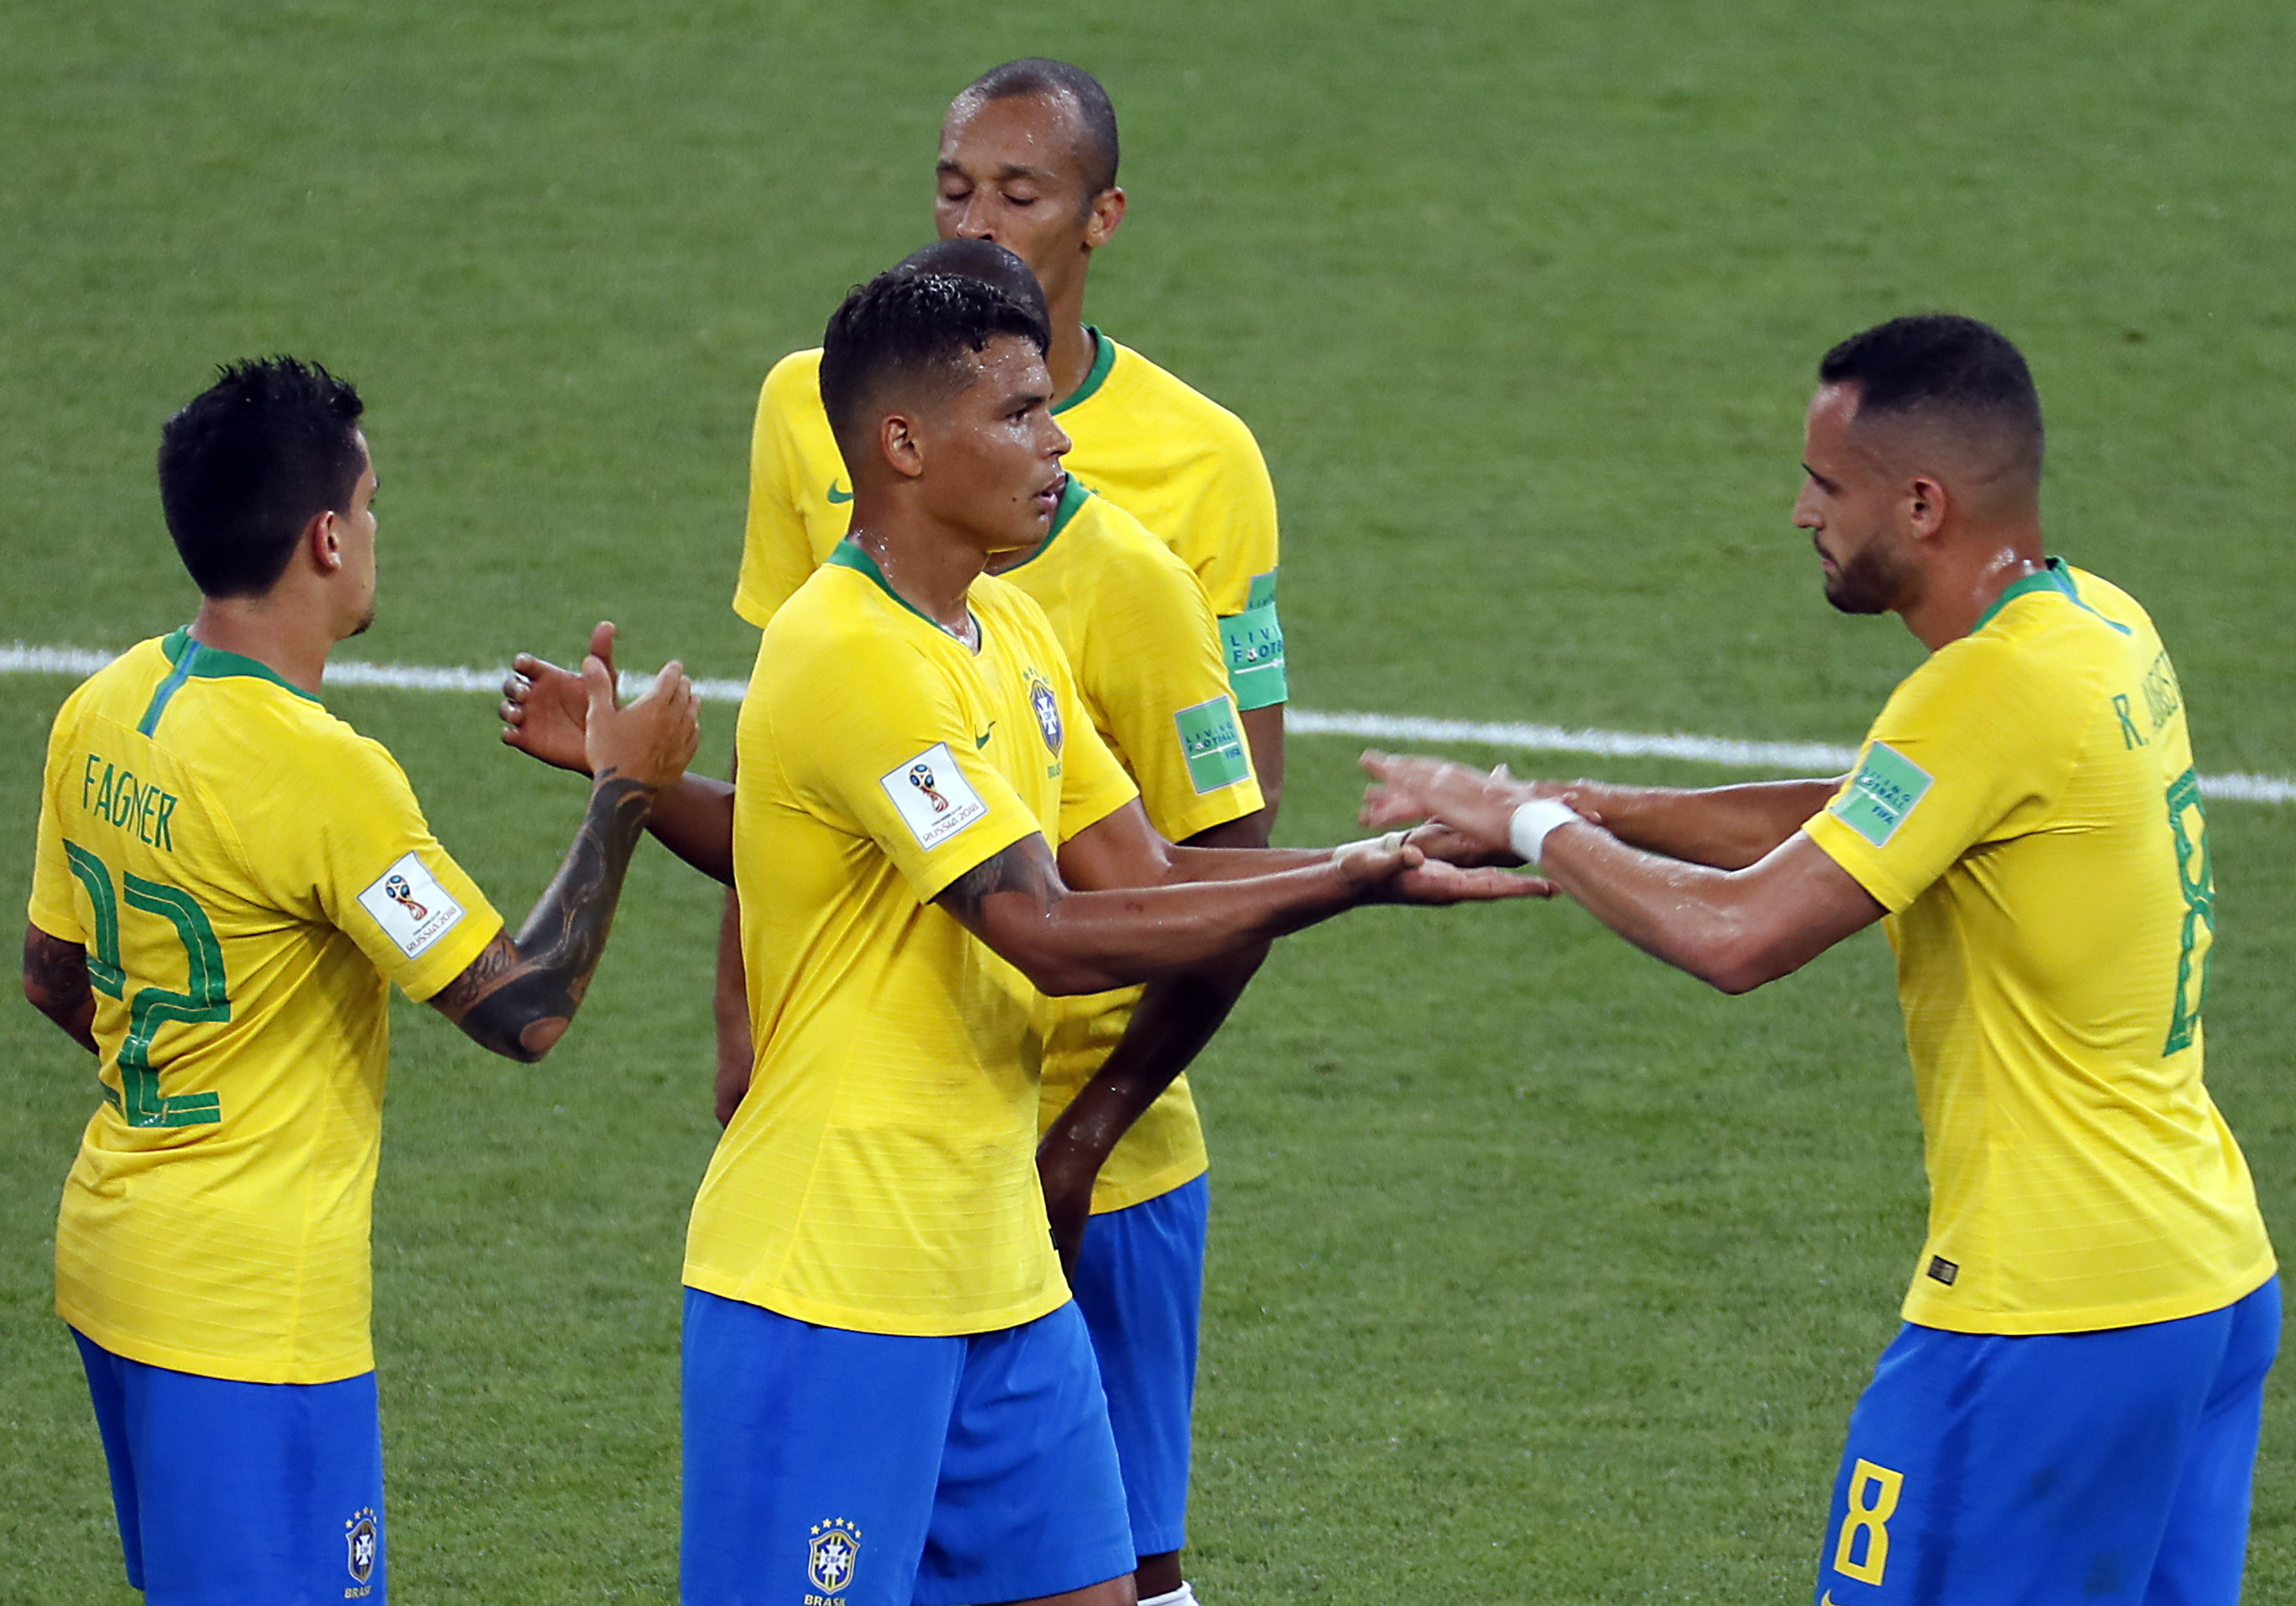 Brasil pasa a ser máximo favorito al título, según proyección del banco Itaú